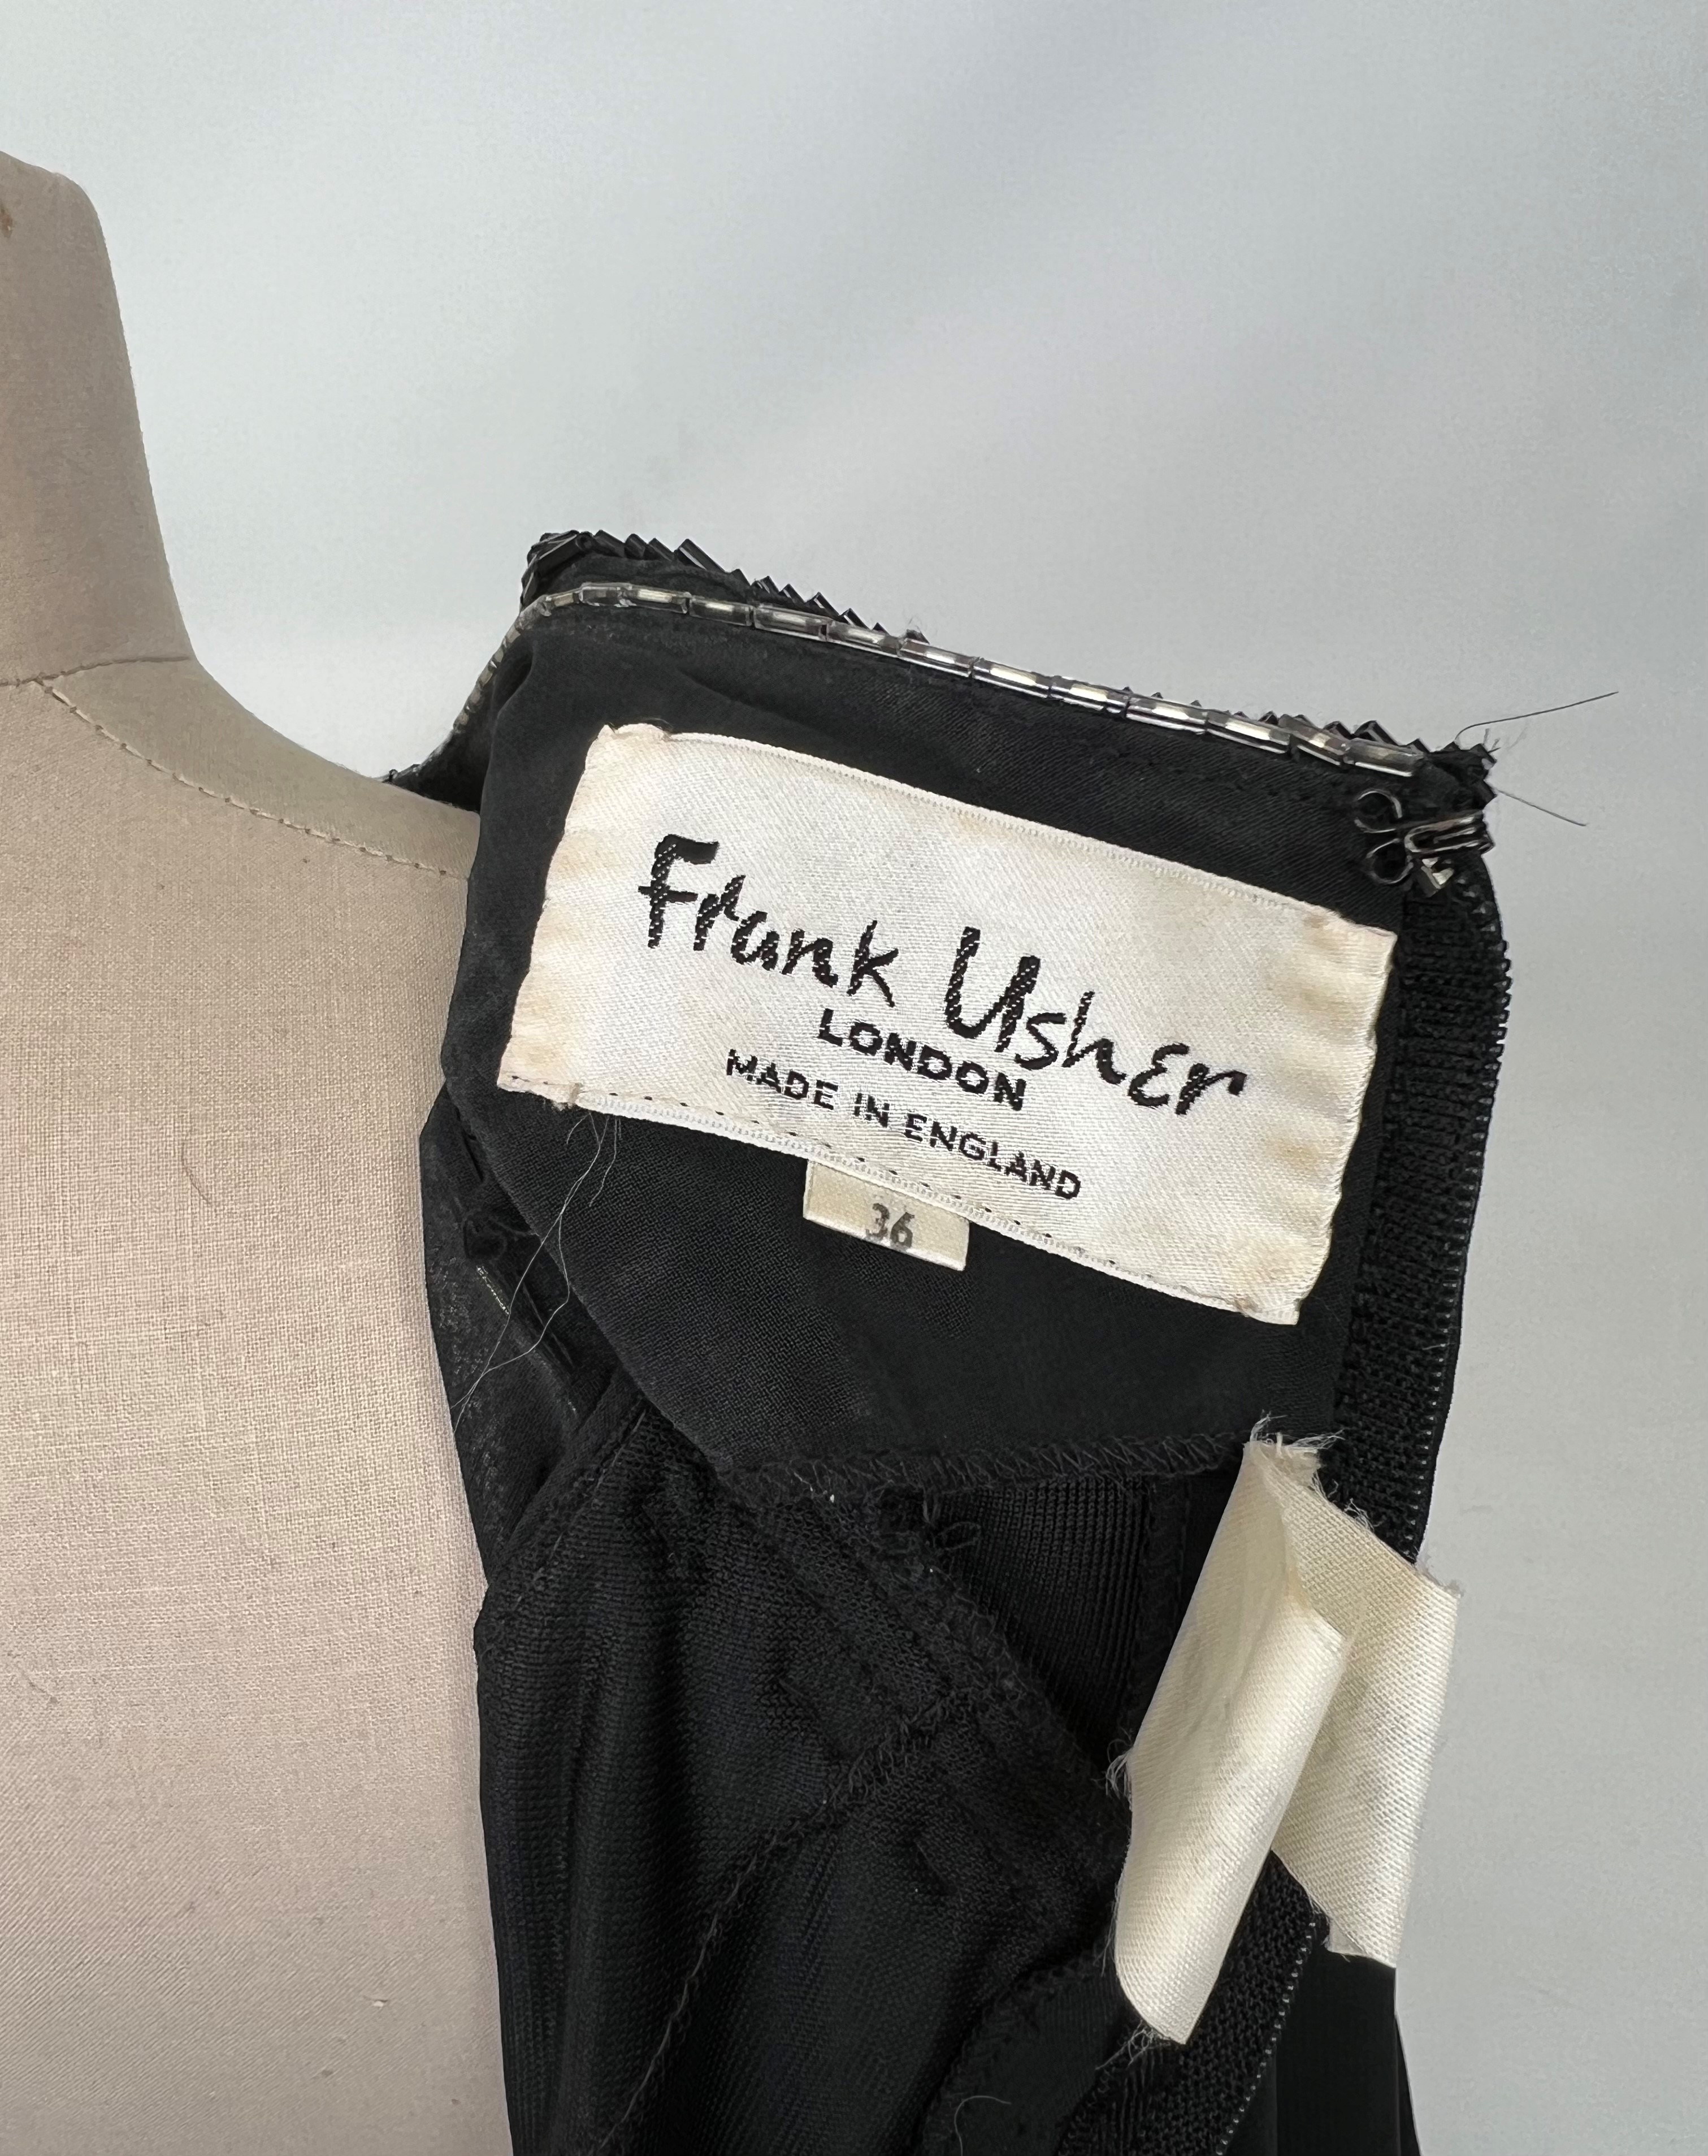 Frank Usher, vintage 1970s, full-length black evening dress with elaborate bugle bead neckline and - Image 13 of 15